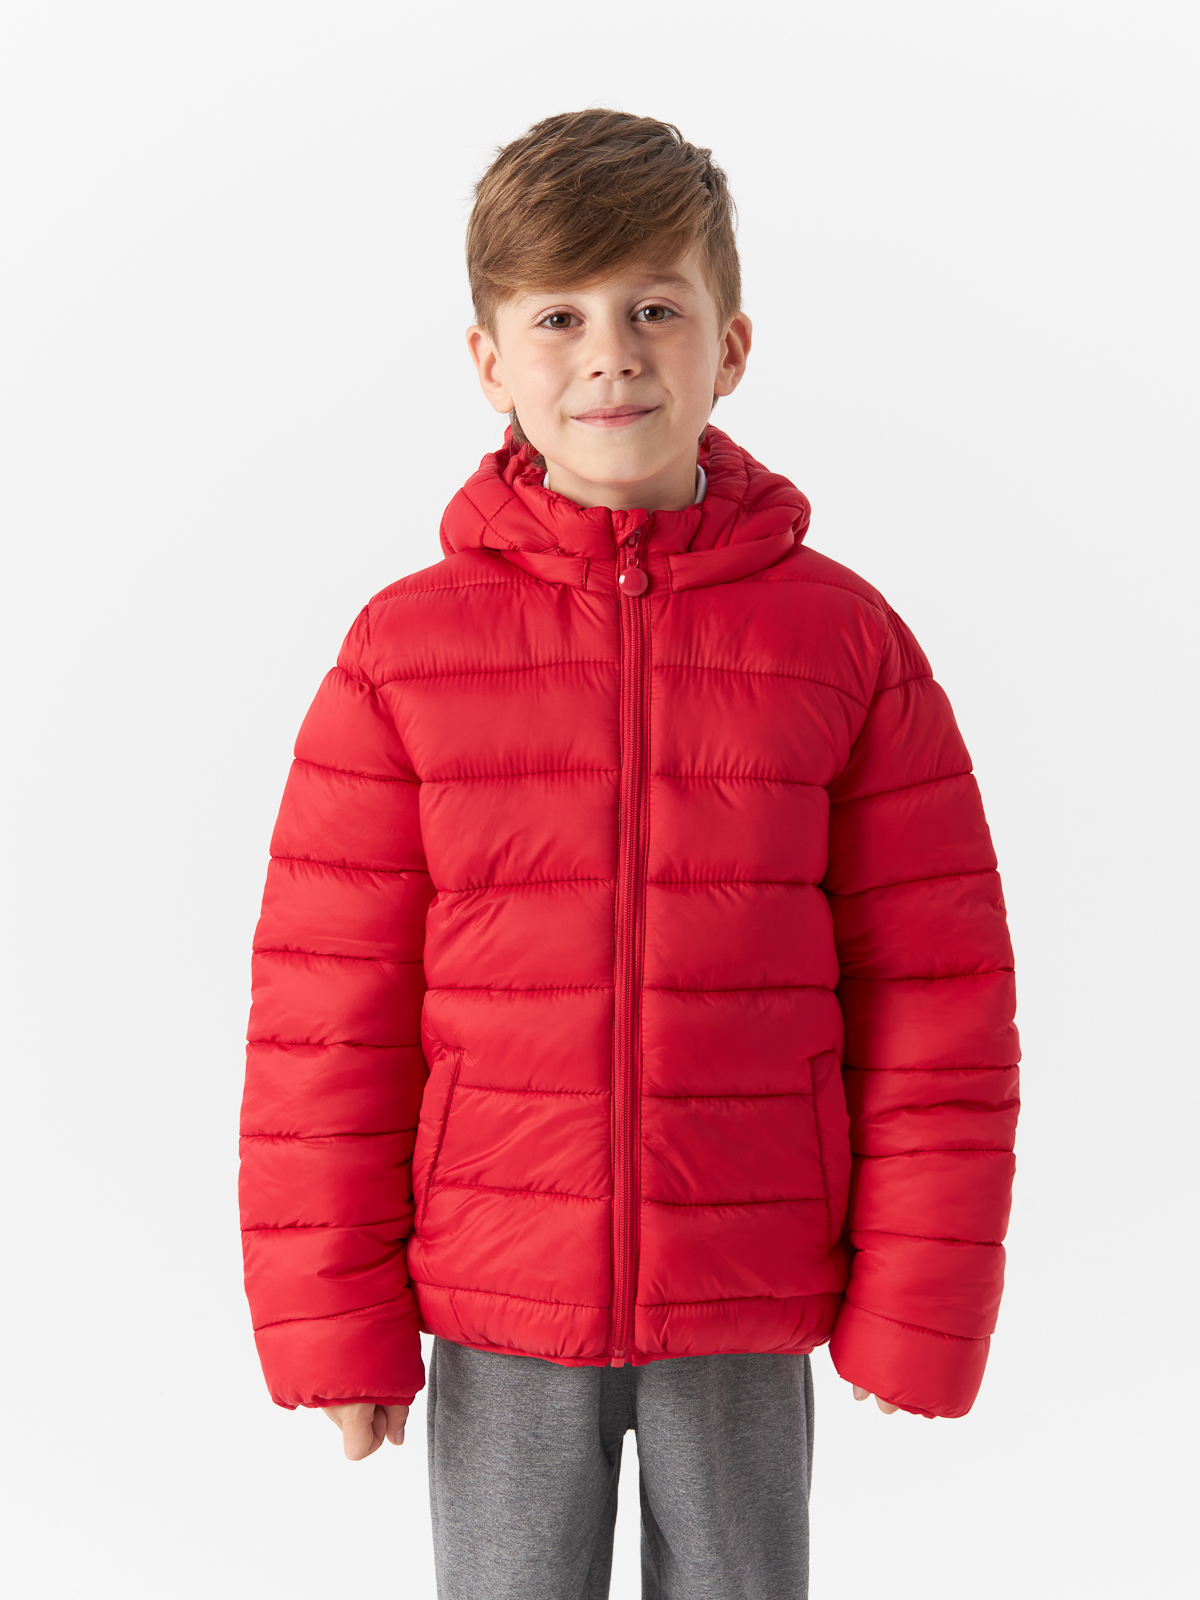 Куртка Mcstyles для мальчиков, размер 110, SMM10, красная